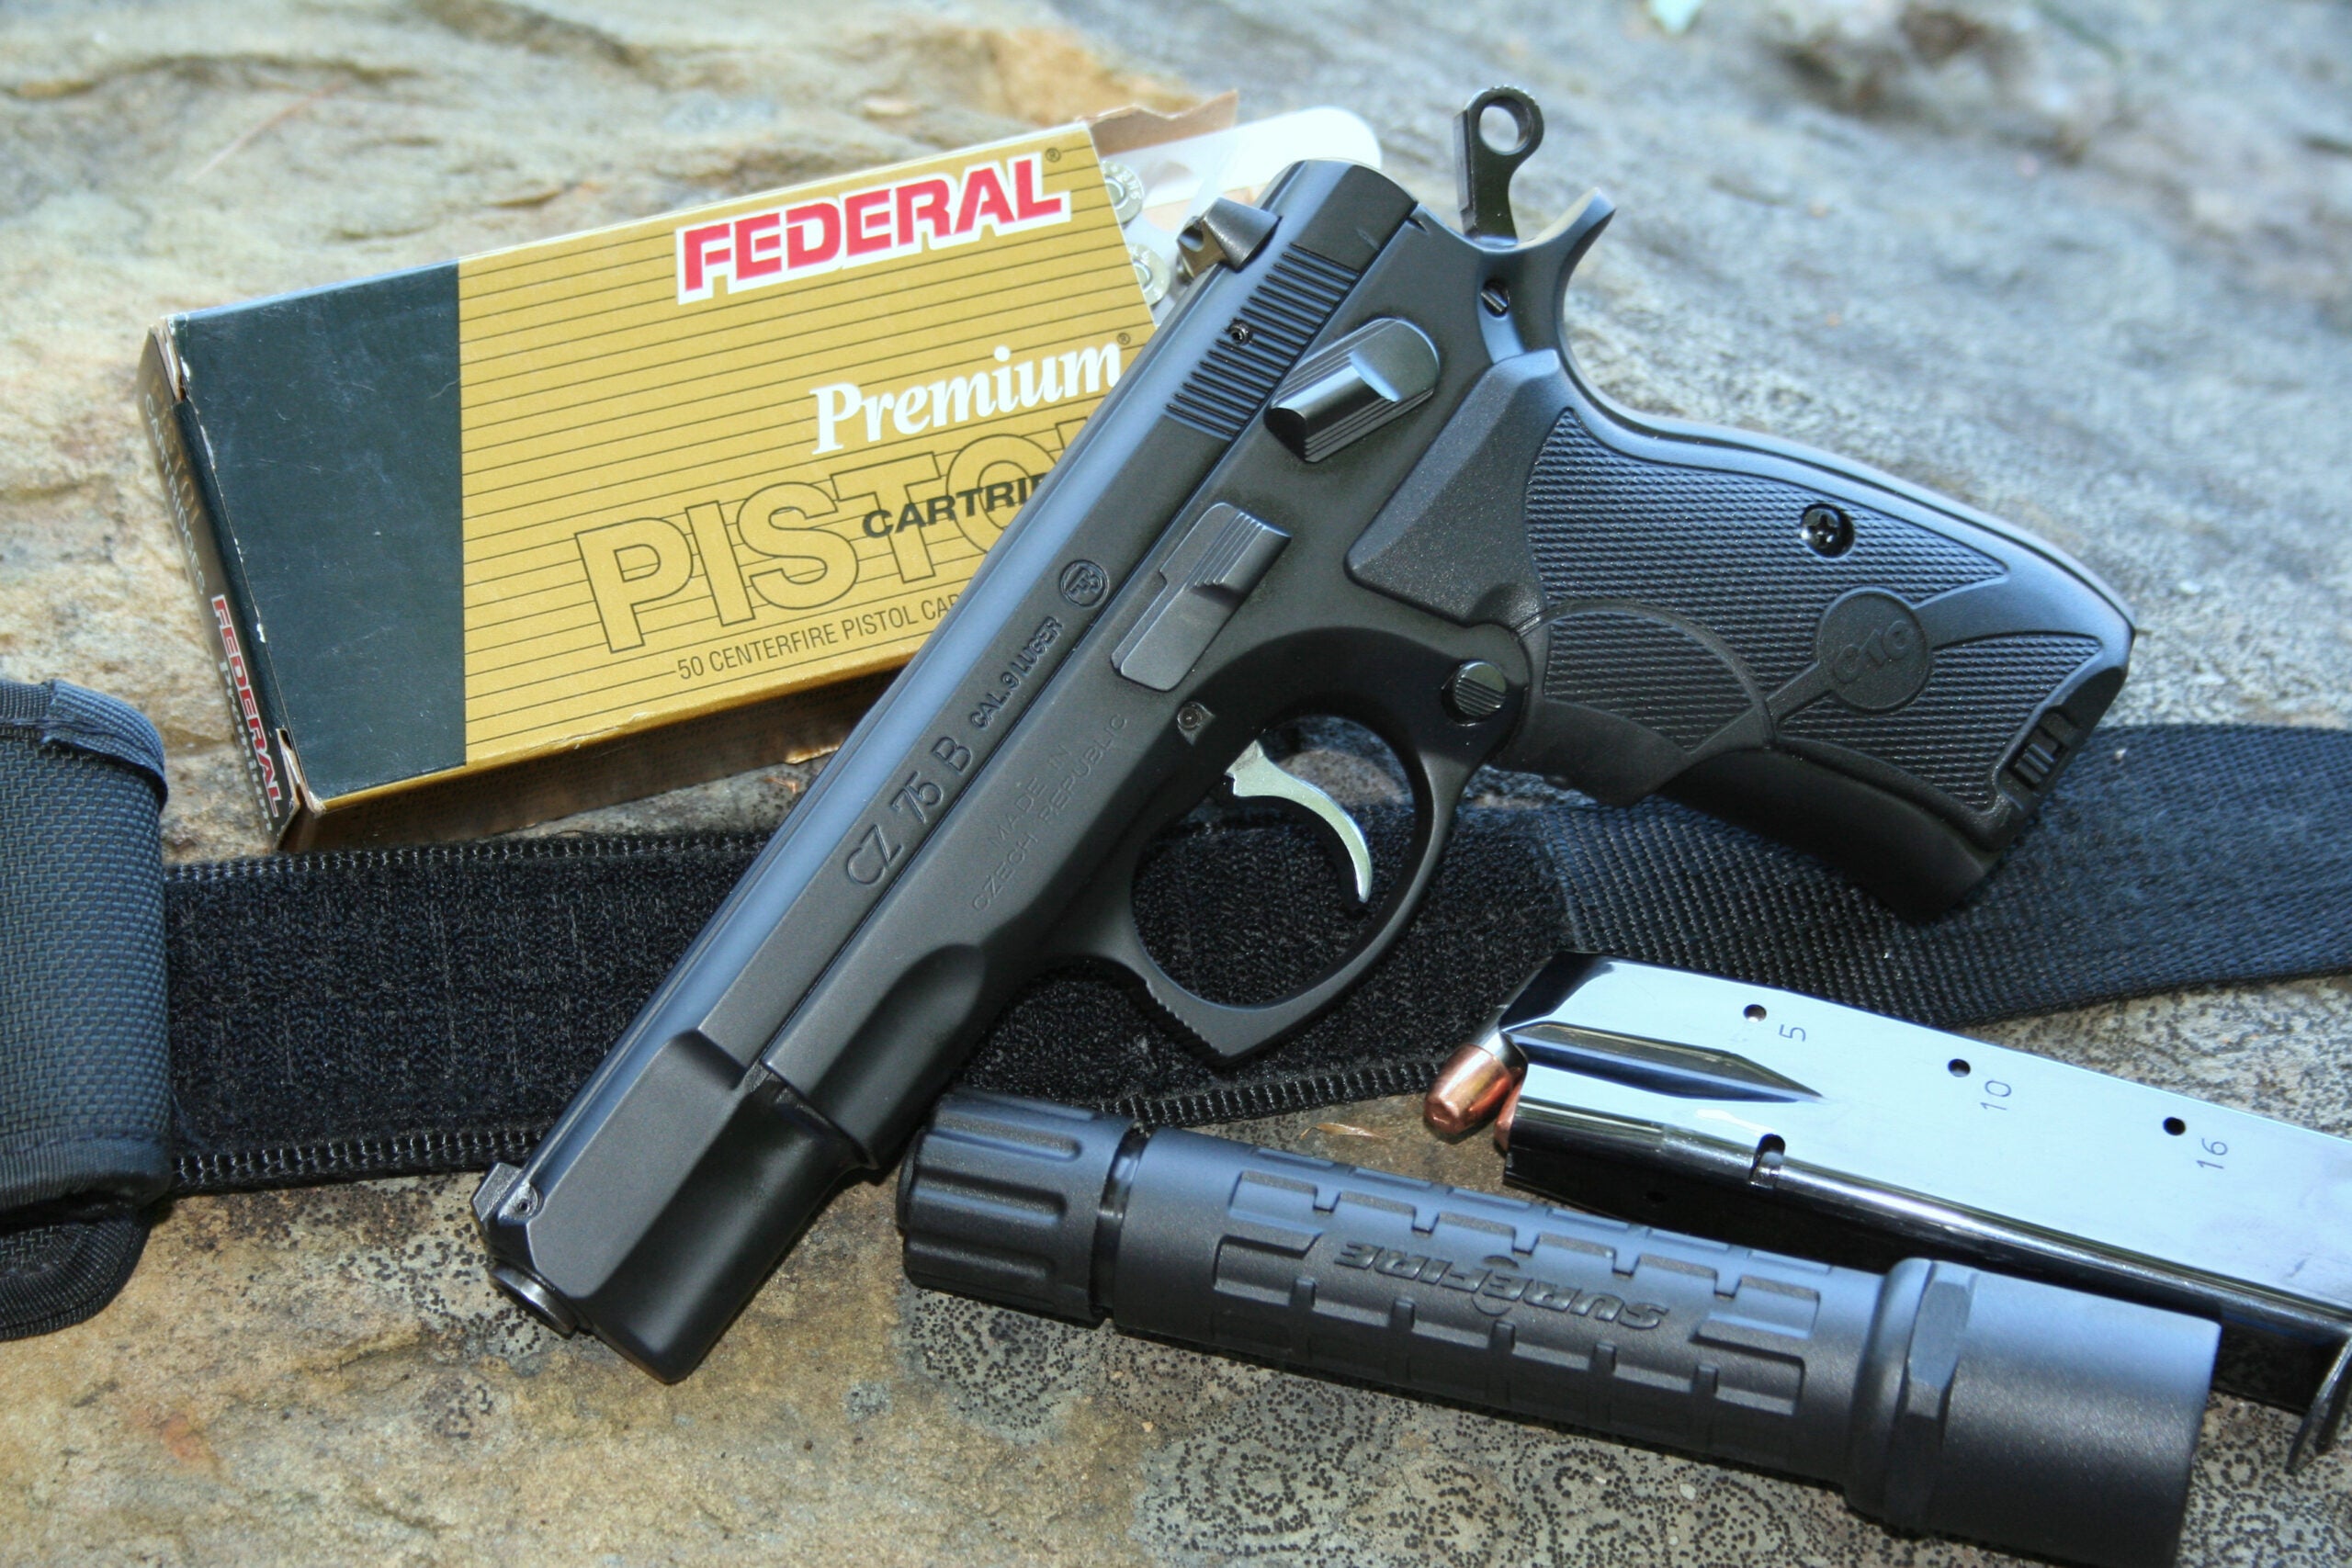 photo of a CZ-75 pistol with ammo, magazine, and flashlight